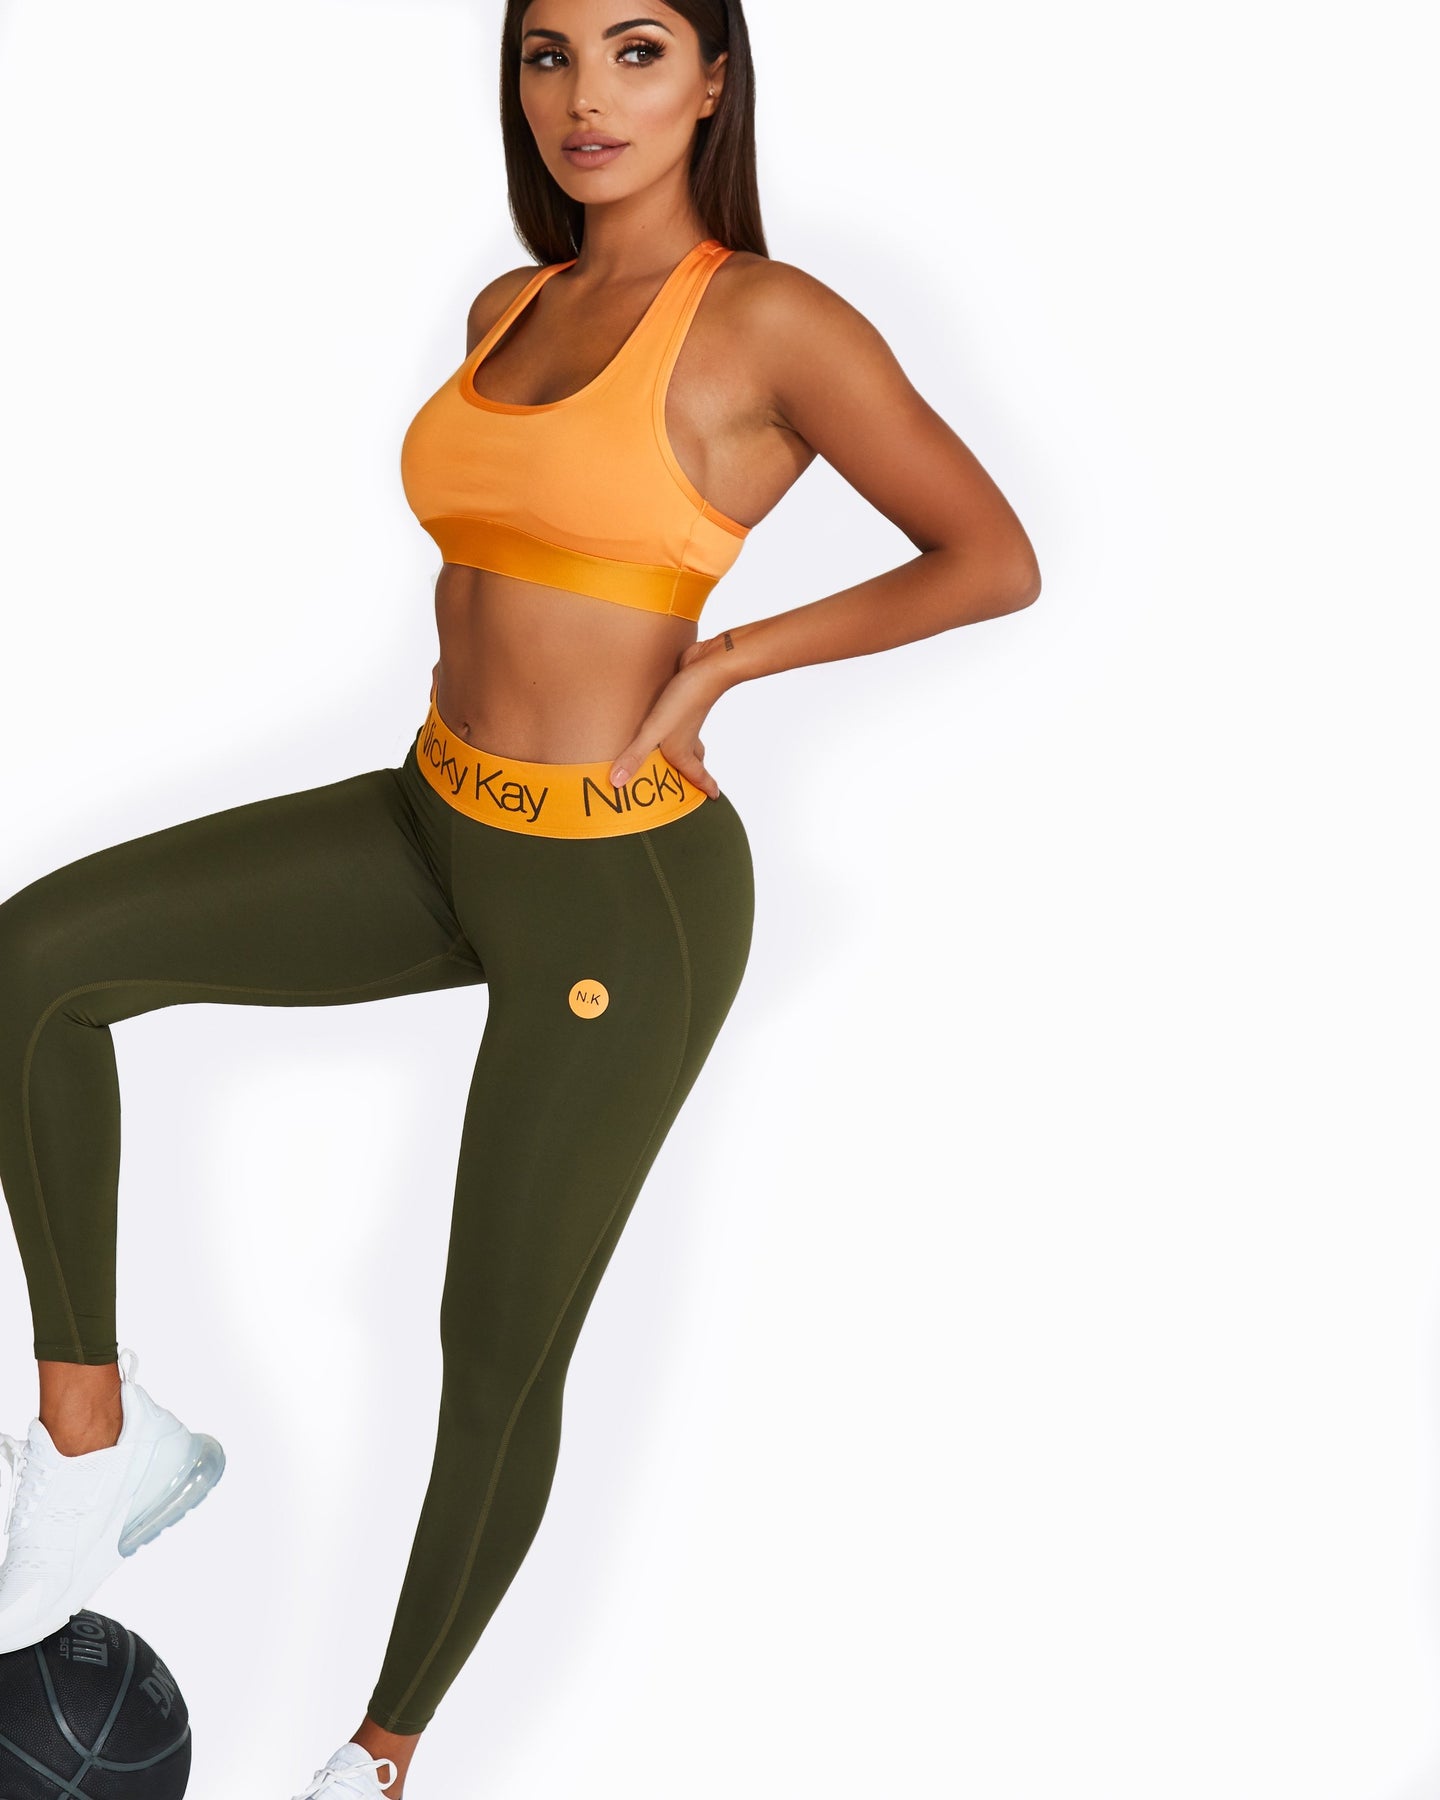 Nicky Kay Women's Fit Glam Compression Tights / Leggings - Khaki/Orange